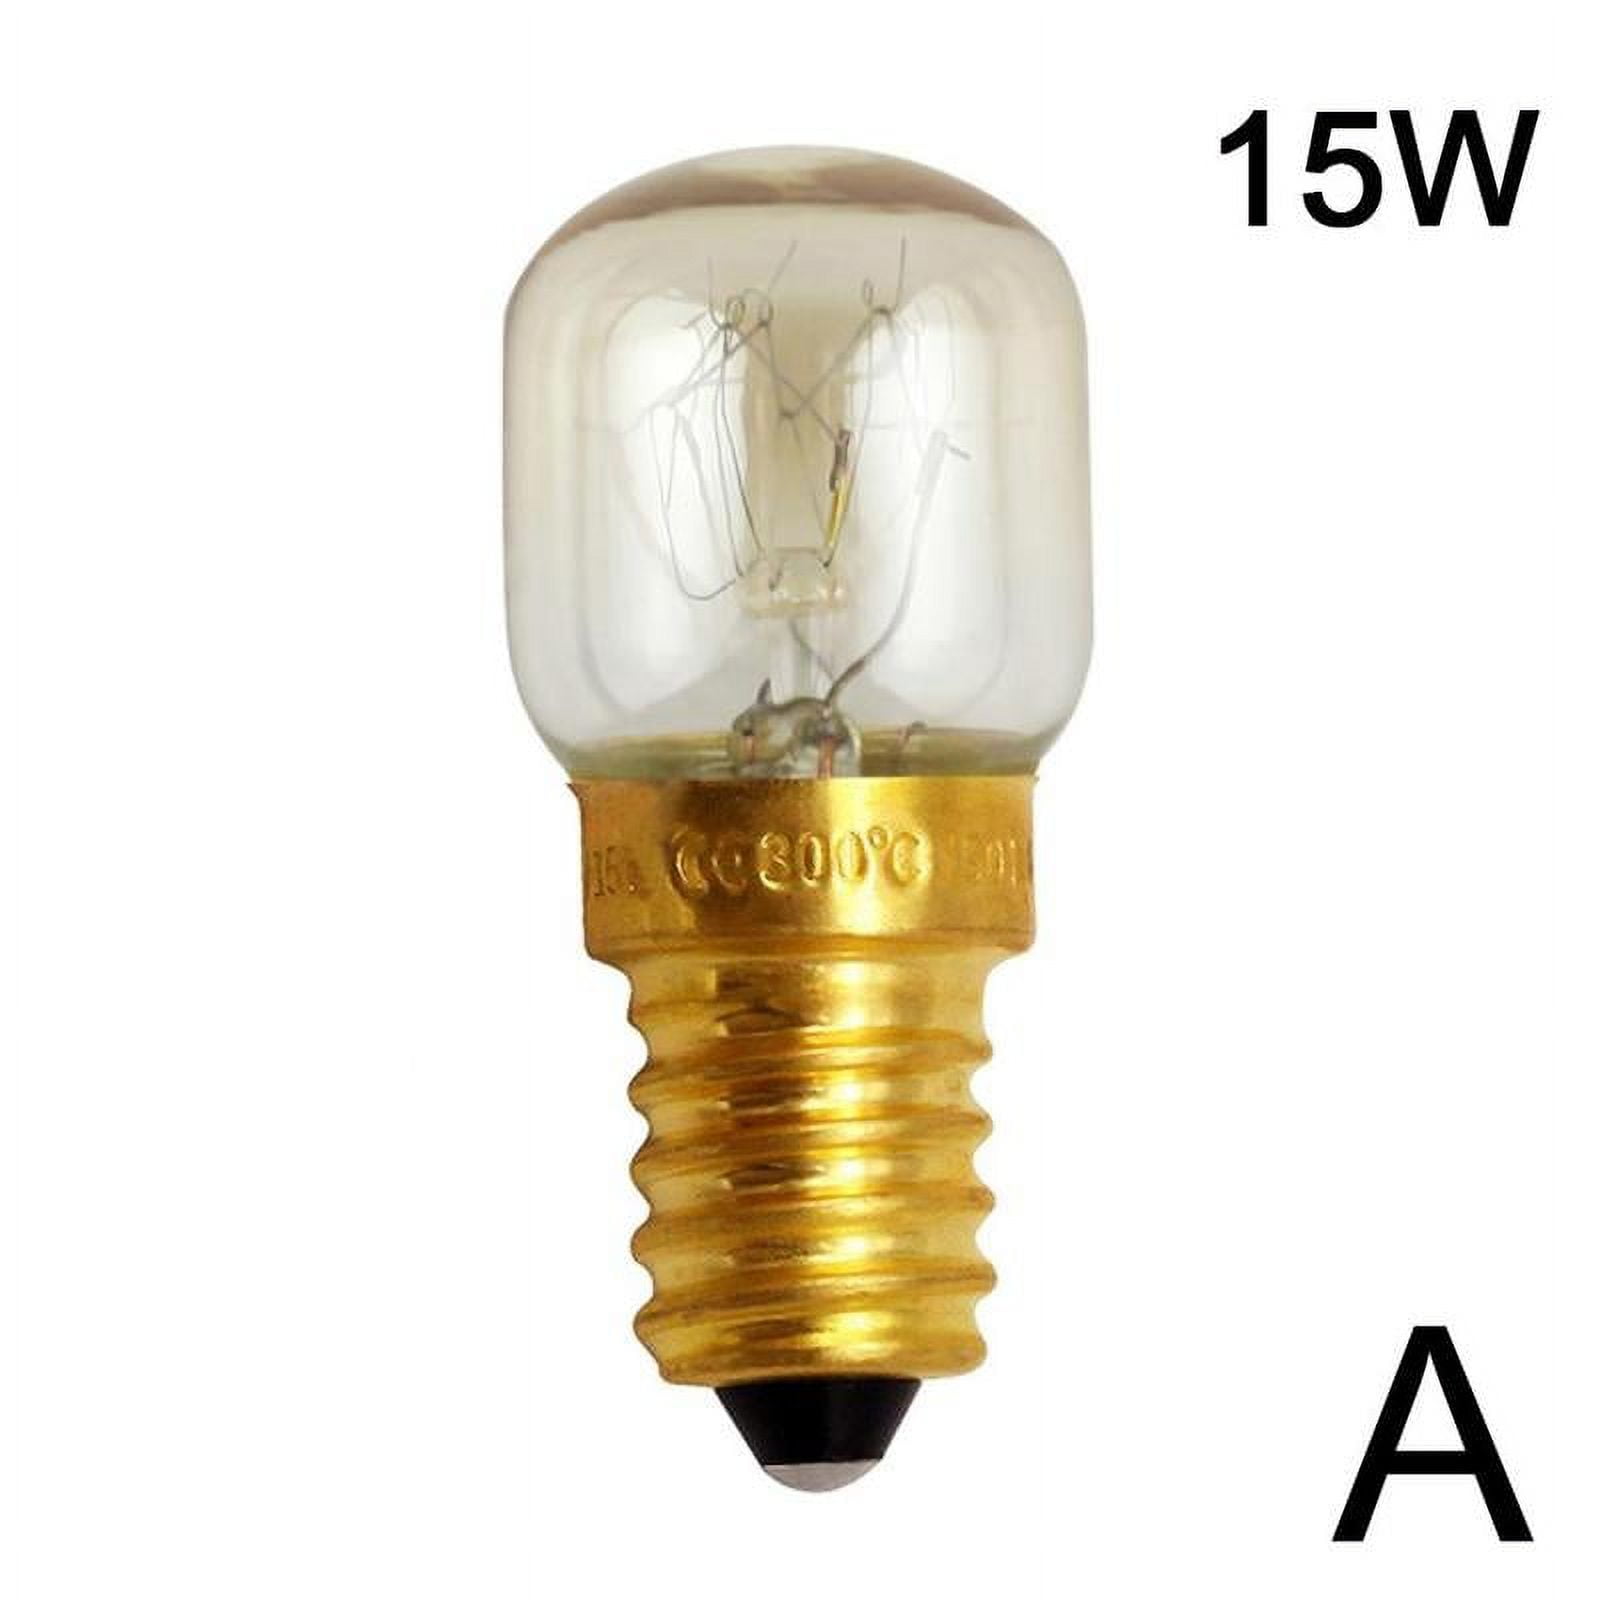 1pc E14 25w 15w Lamps Oven Light Cooker Heat Bulb 220-240v